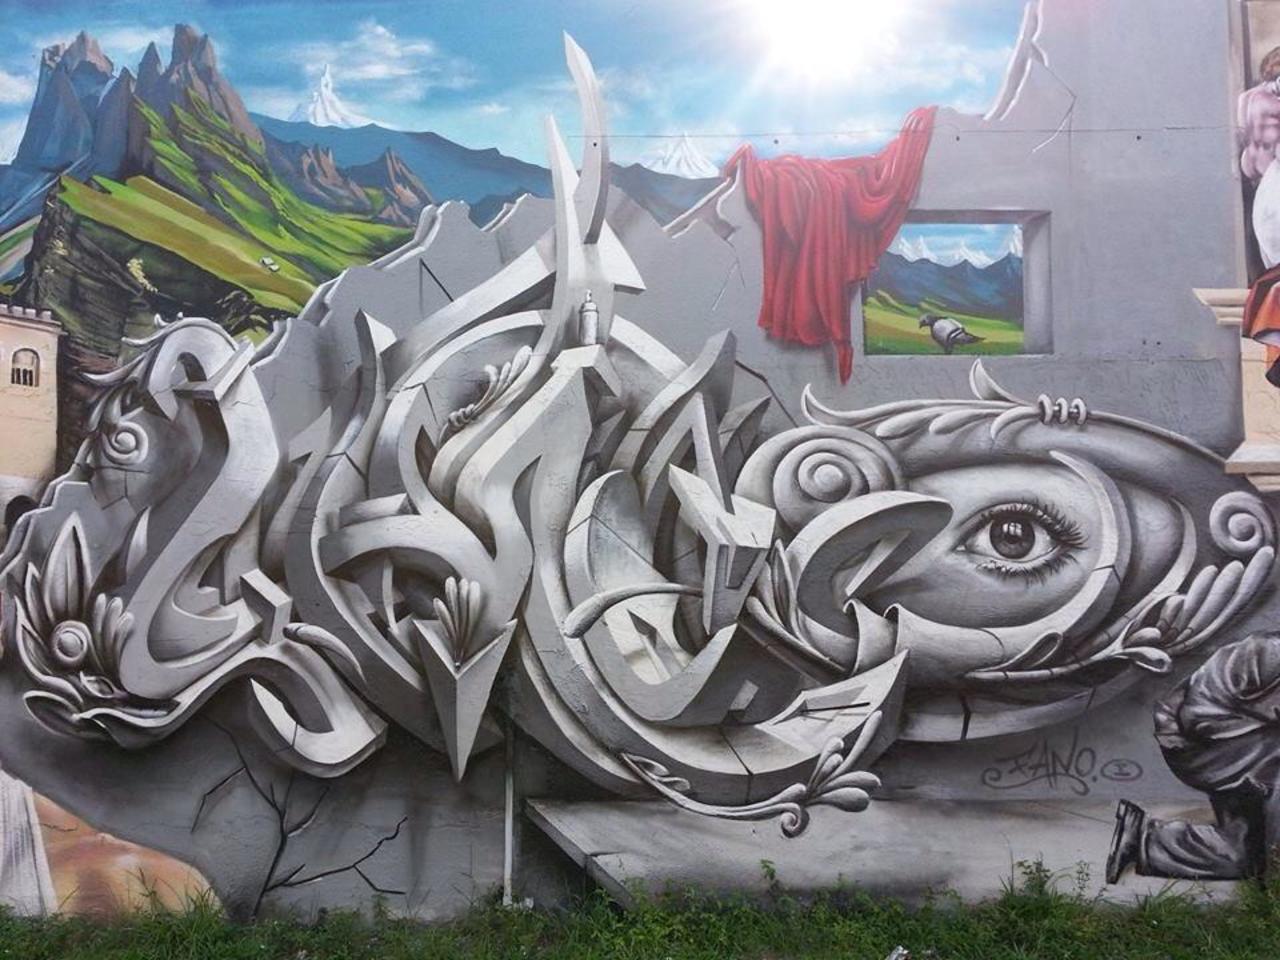 Artist 'Smog One' new Street Art wall located in Broward blvd, Florida, USA #art #mural #graffiti #streetart https://t.co/NxP1o356cl